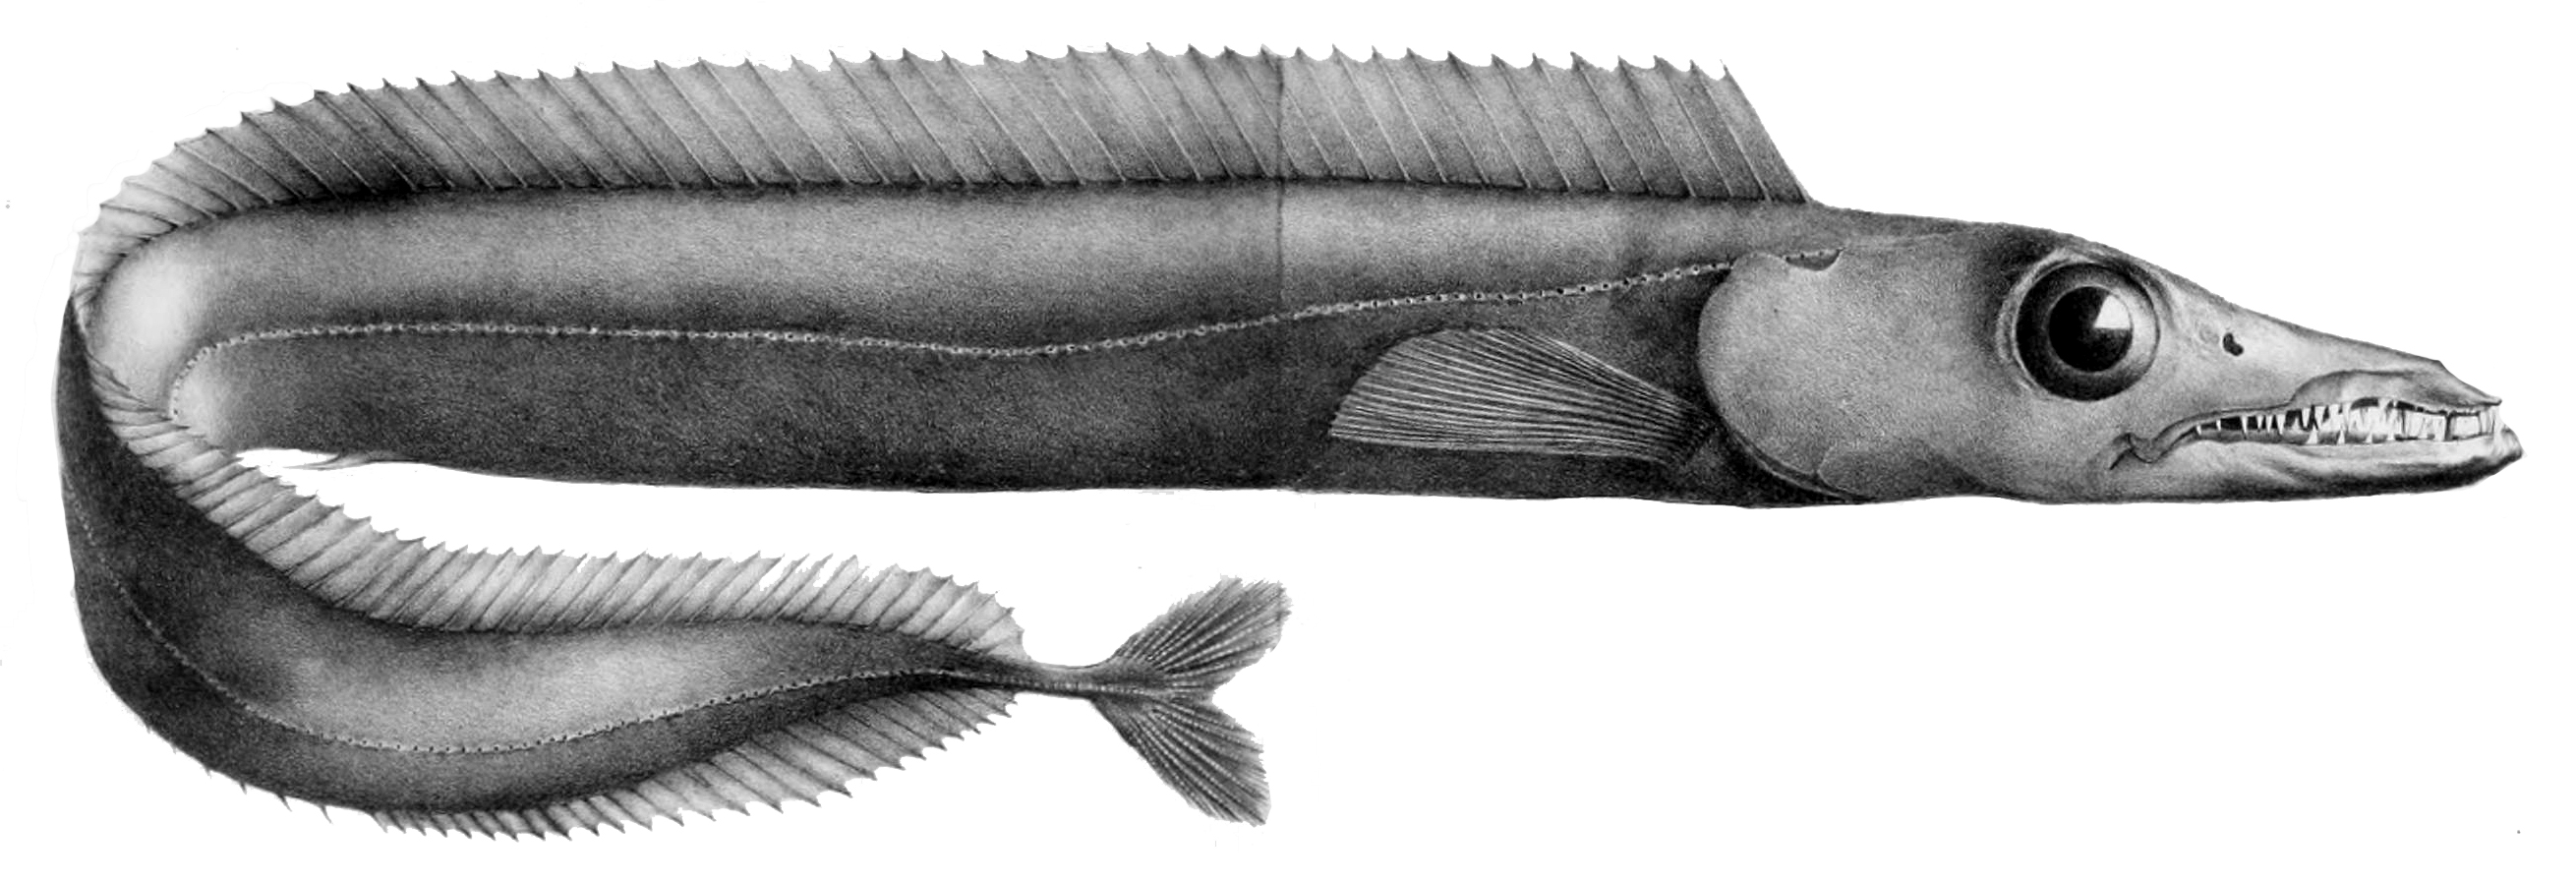 Black scabbardfish wallpaper